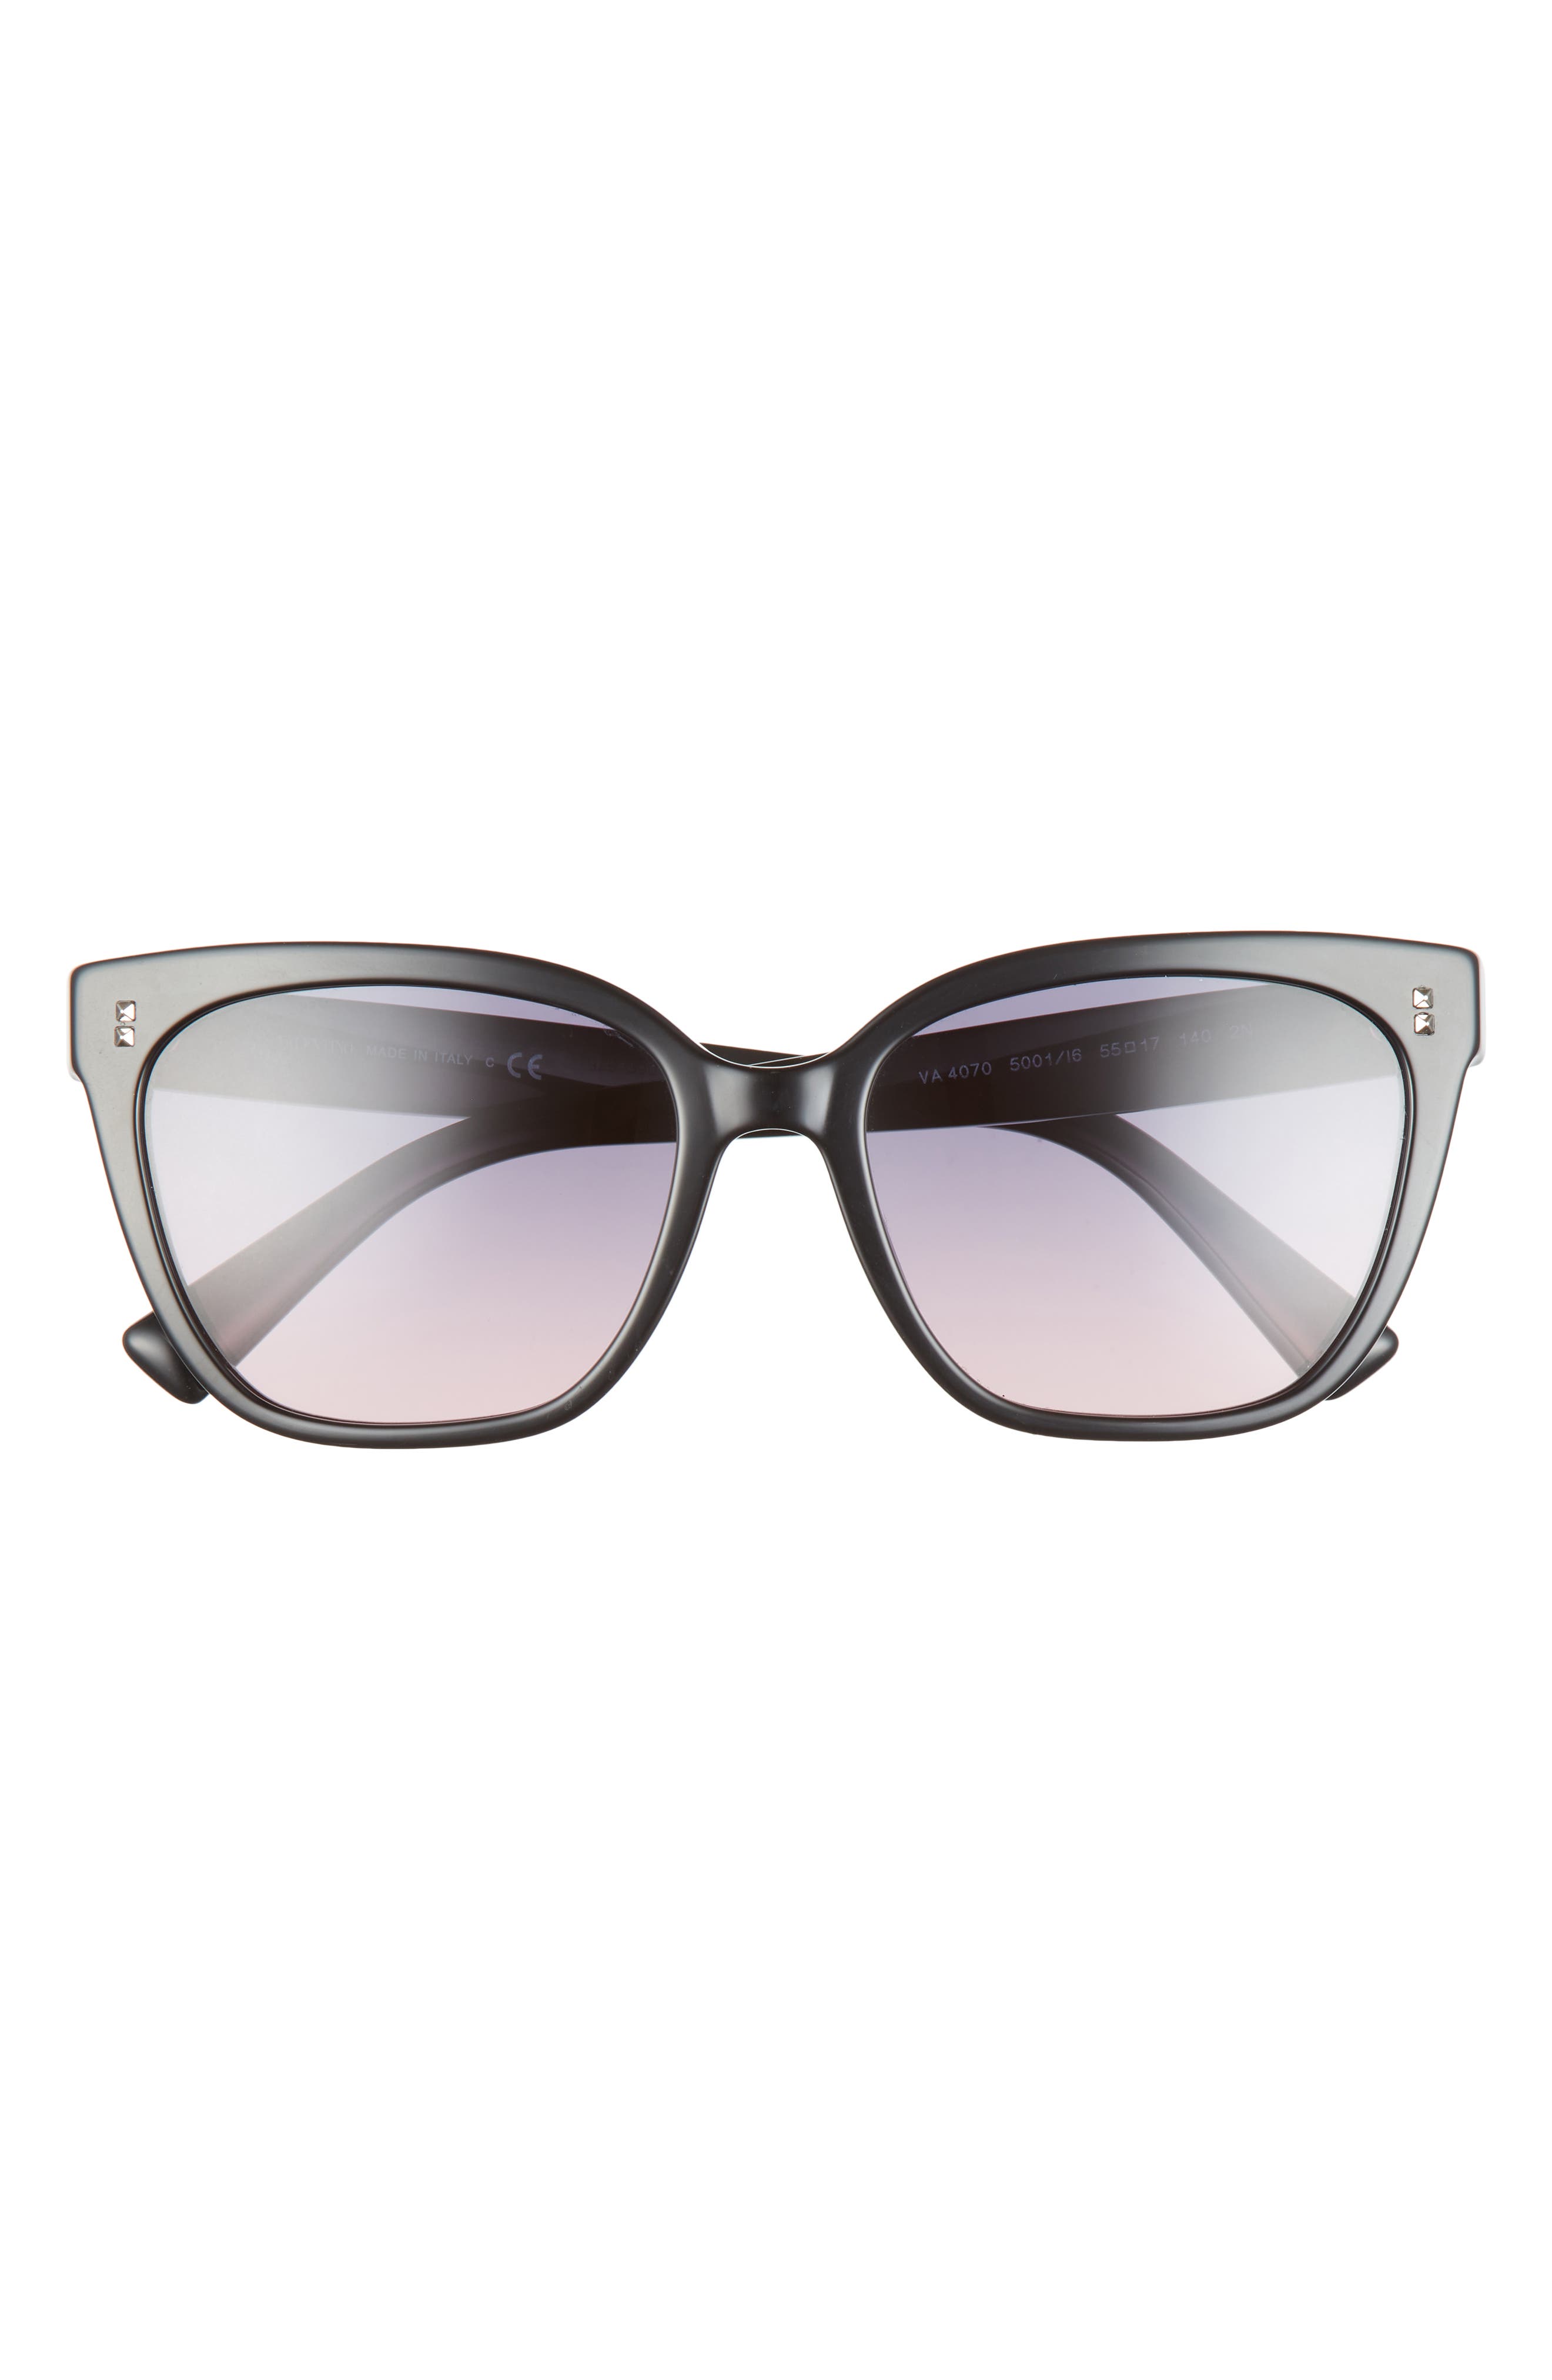 Valentino Rockstud 55mm Gradient Cat Eye Sunglasses in Black/Gradient Pink Blue at Nordstrom